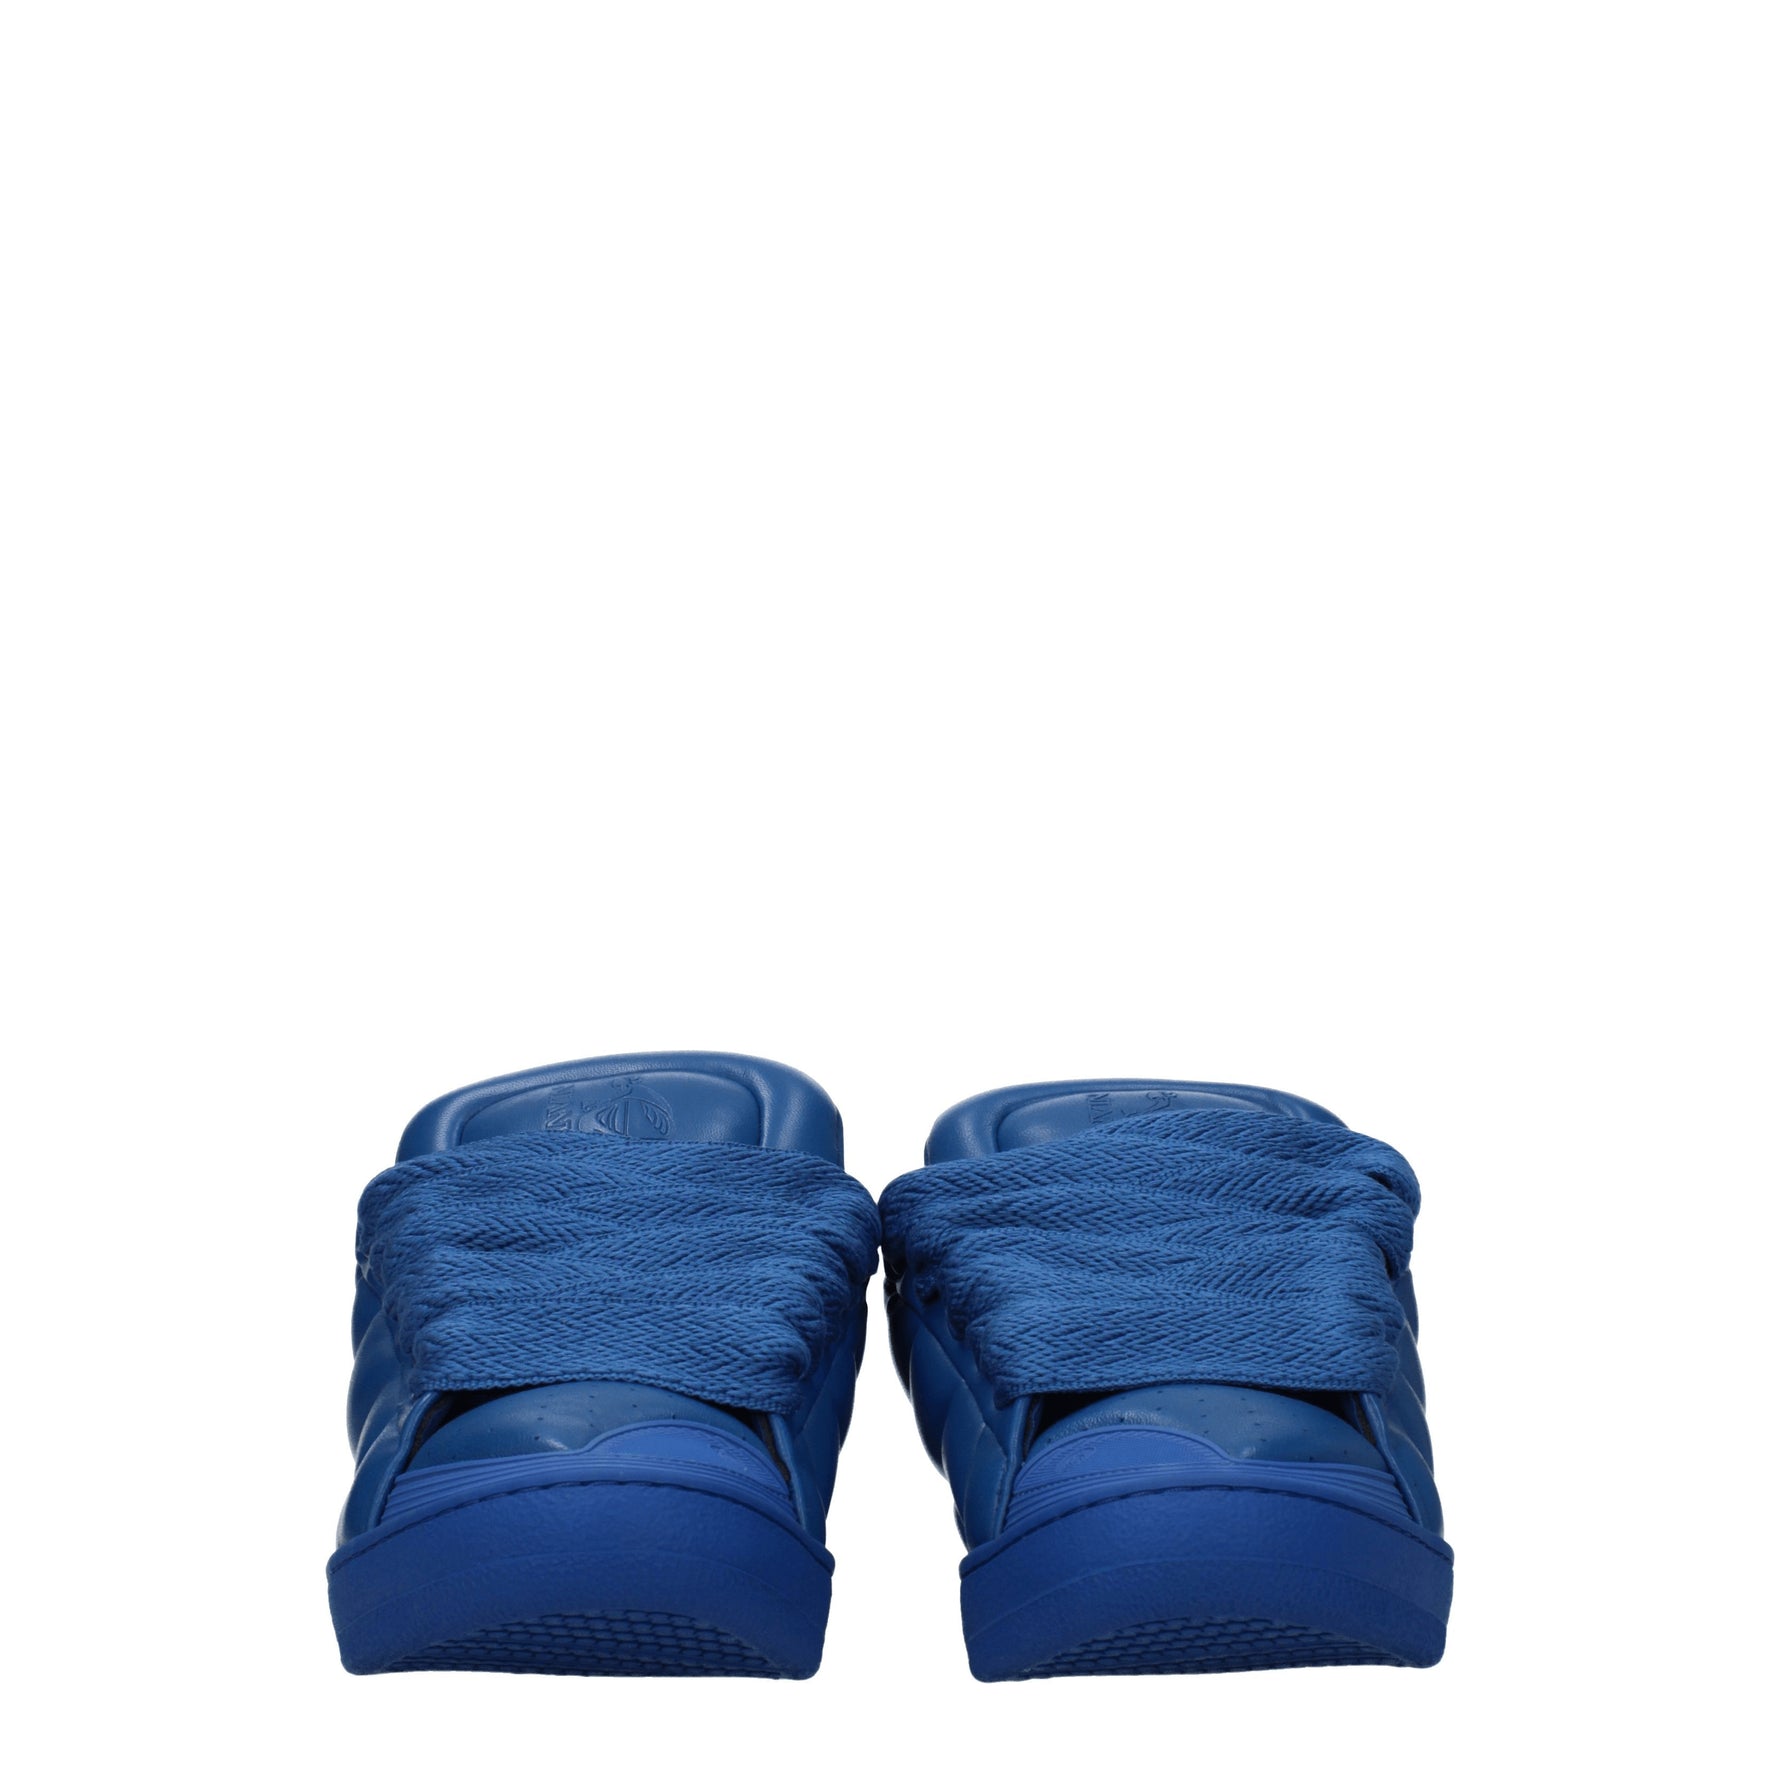 Lanvin Sneakers curb xl Uomo Pelle Blu